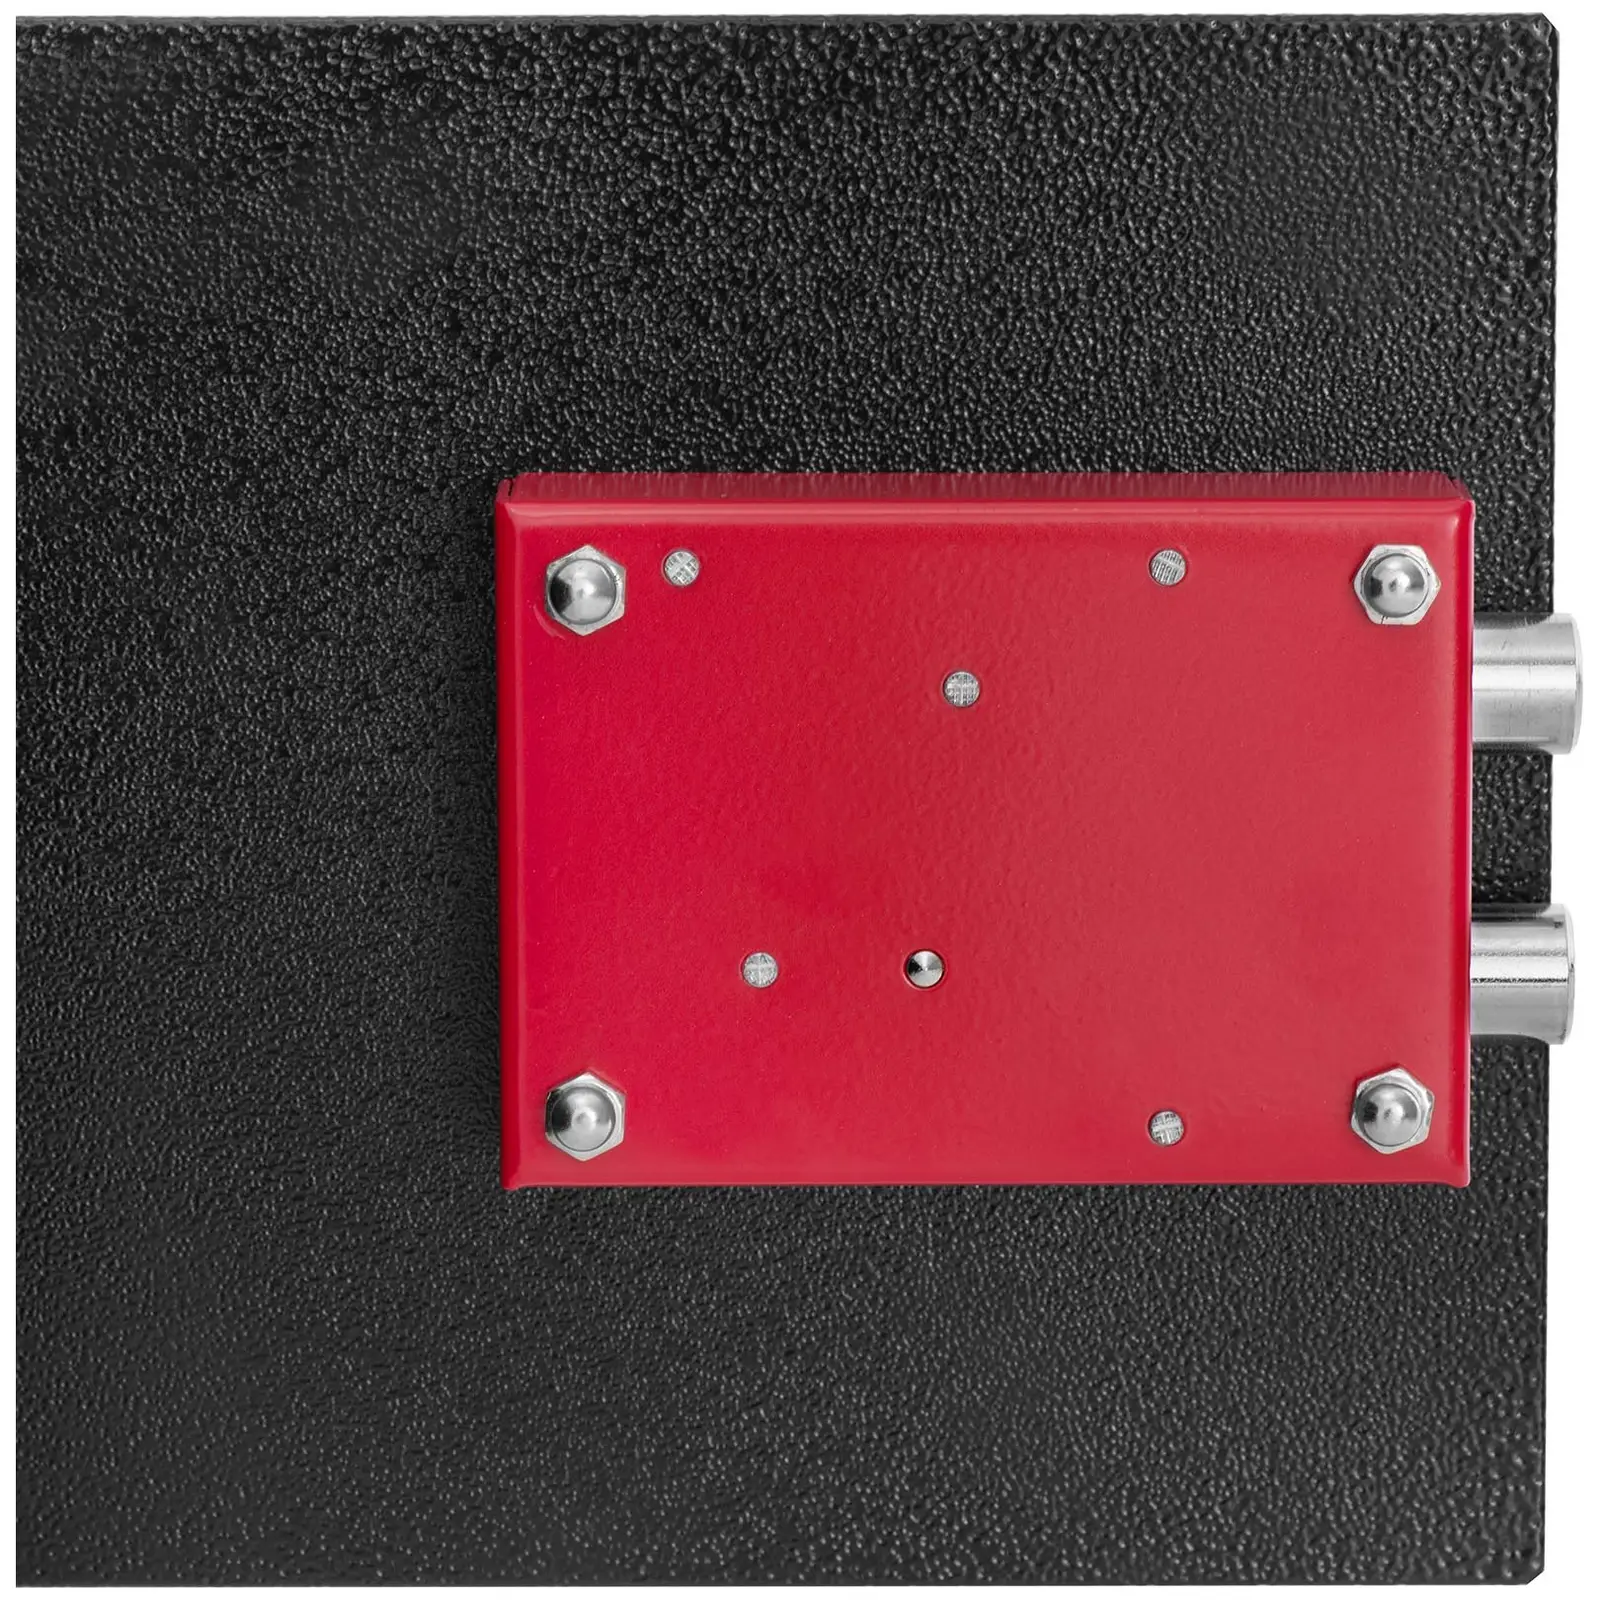 Electronic Safe - 25 x 25 x 35 cm - insertion slot